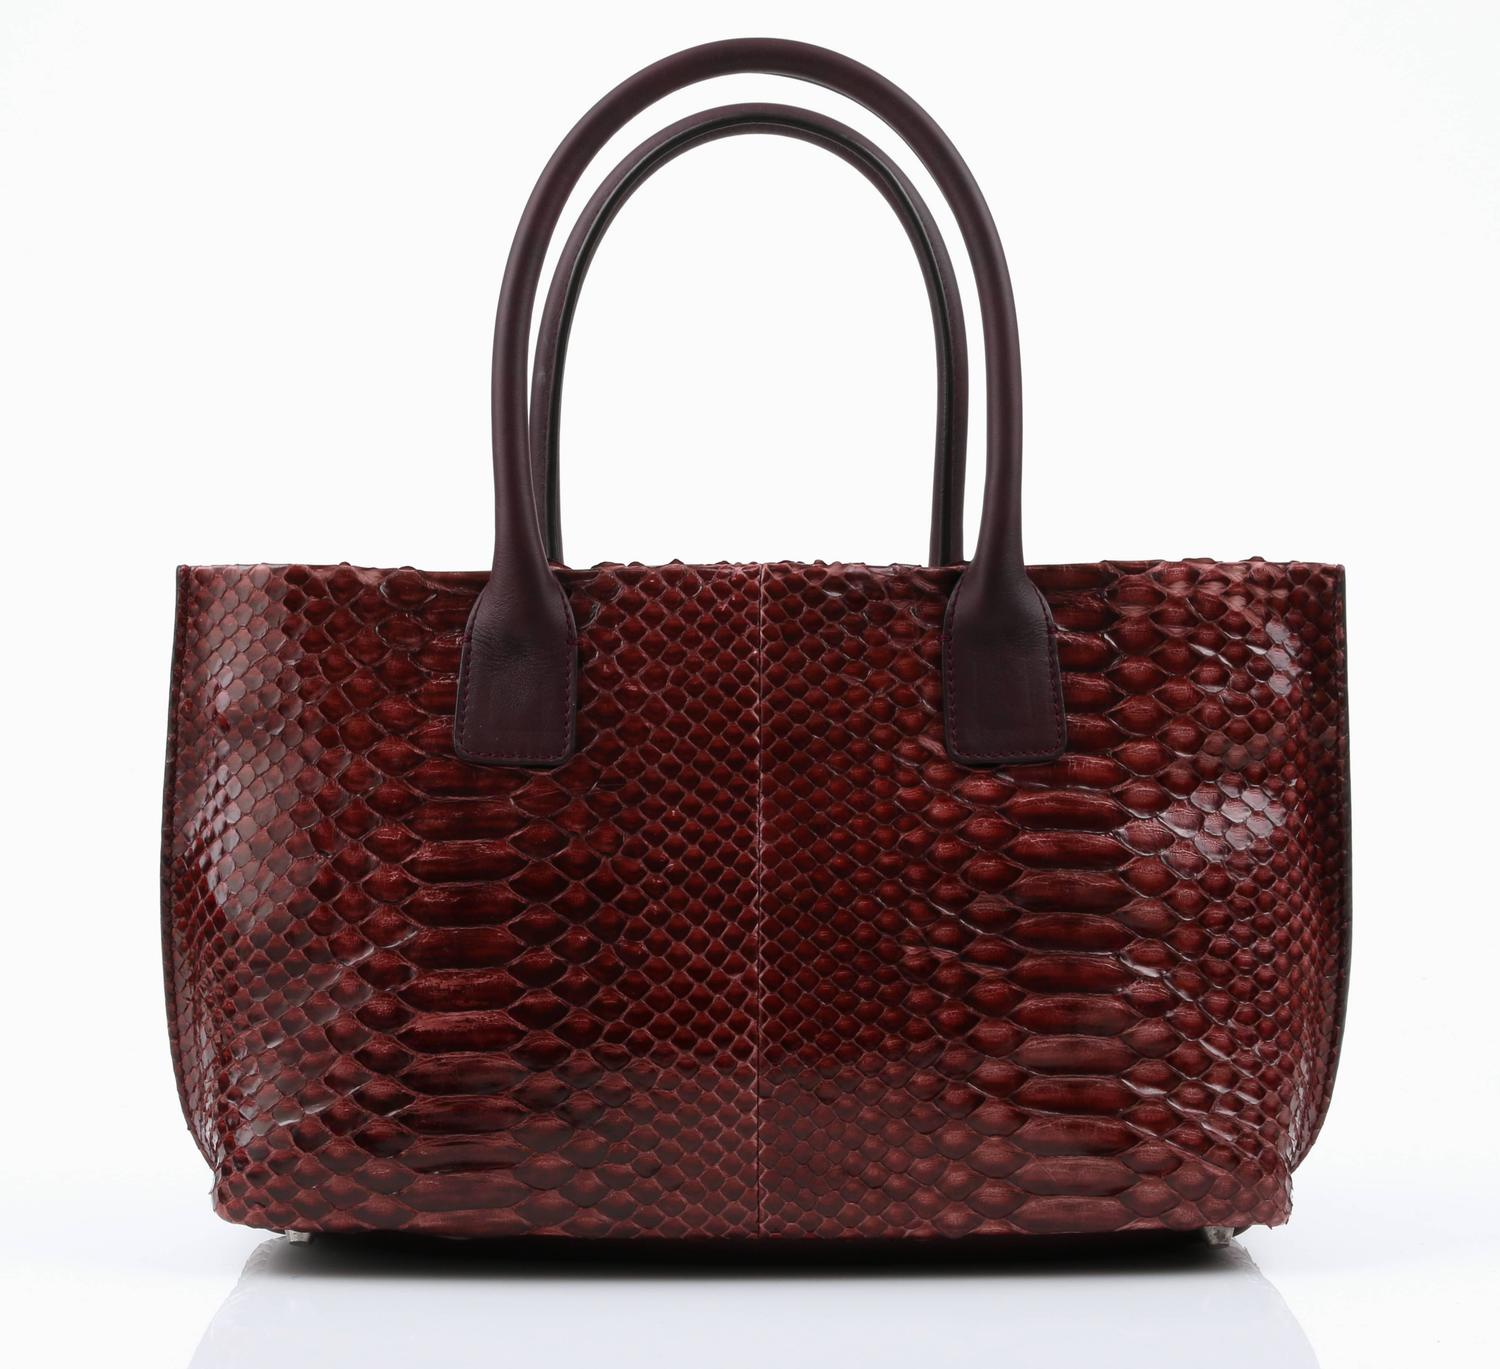 BRUNELLO CUCINELLI Burgundy Red Genuine Python Snakeskin Satchel Handbag Purse For Sale at 1stdibs